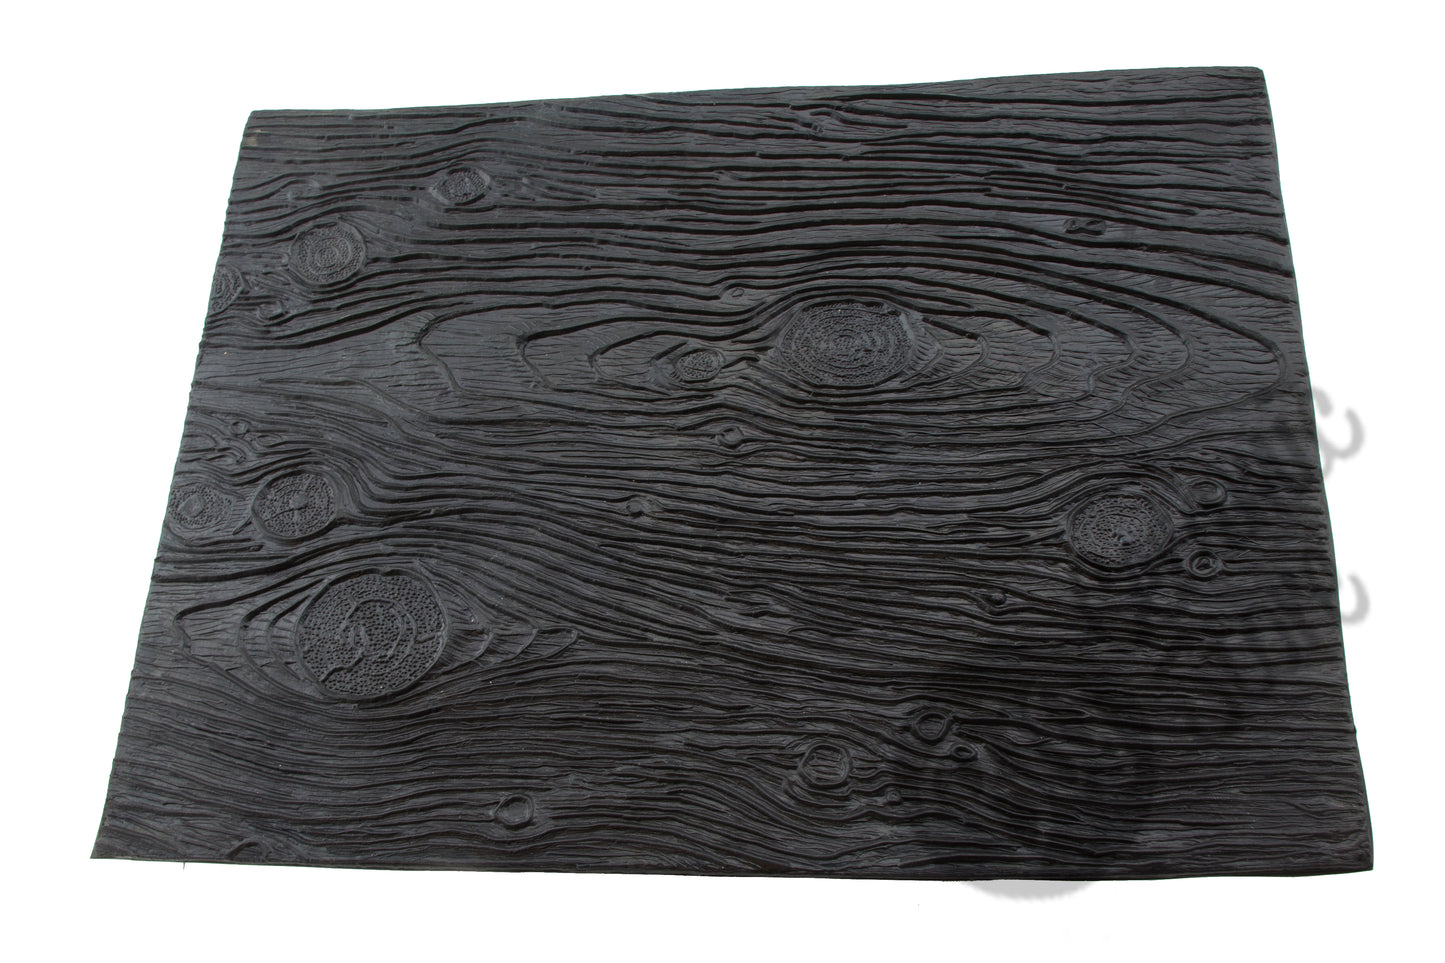 Chinese Clay Art USA XL Plastic Texture Mats, Wood Pattern image 1